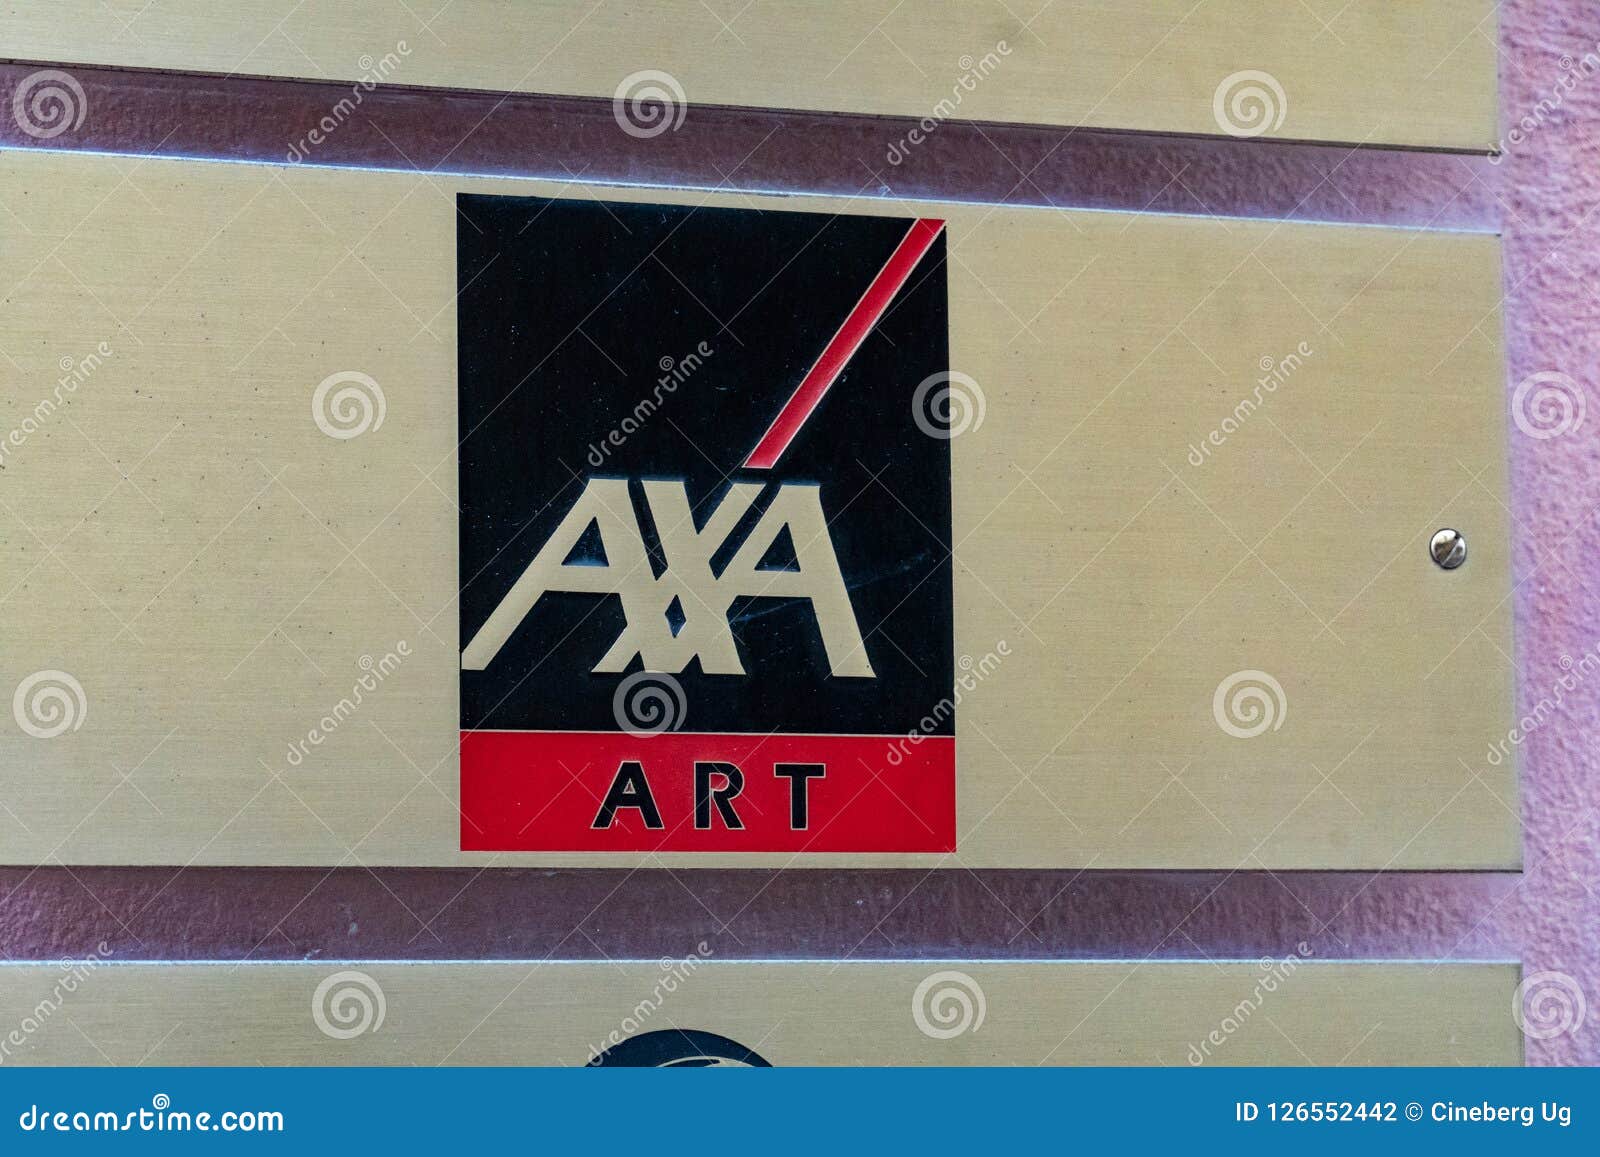 Axa art insurance jobs chicago